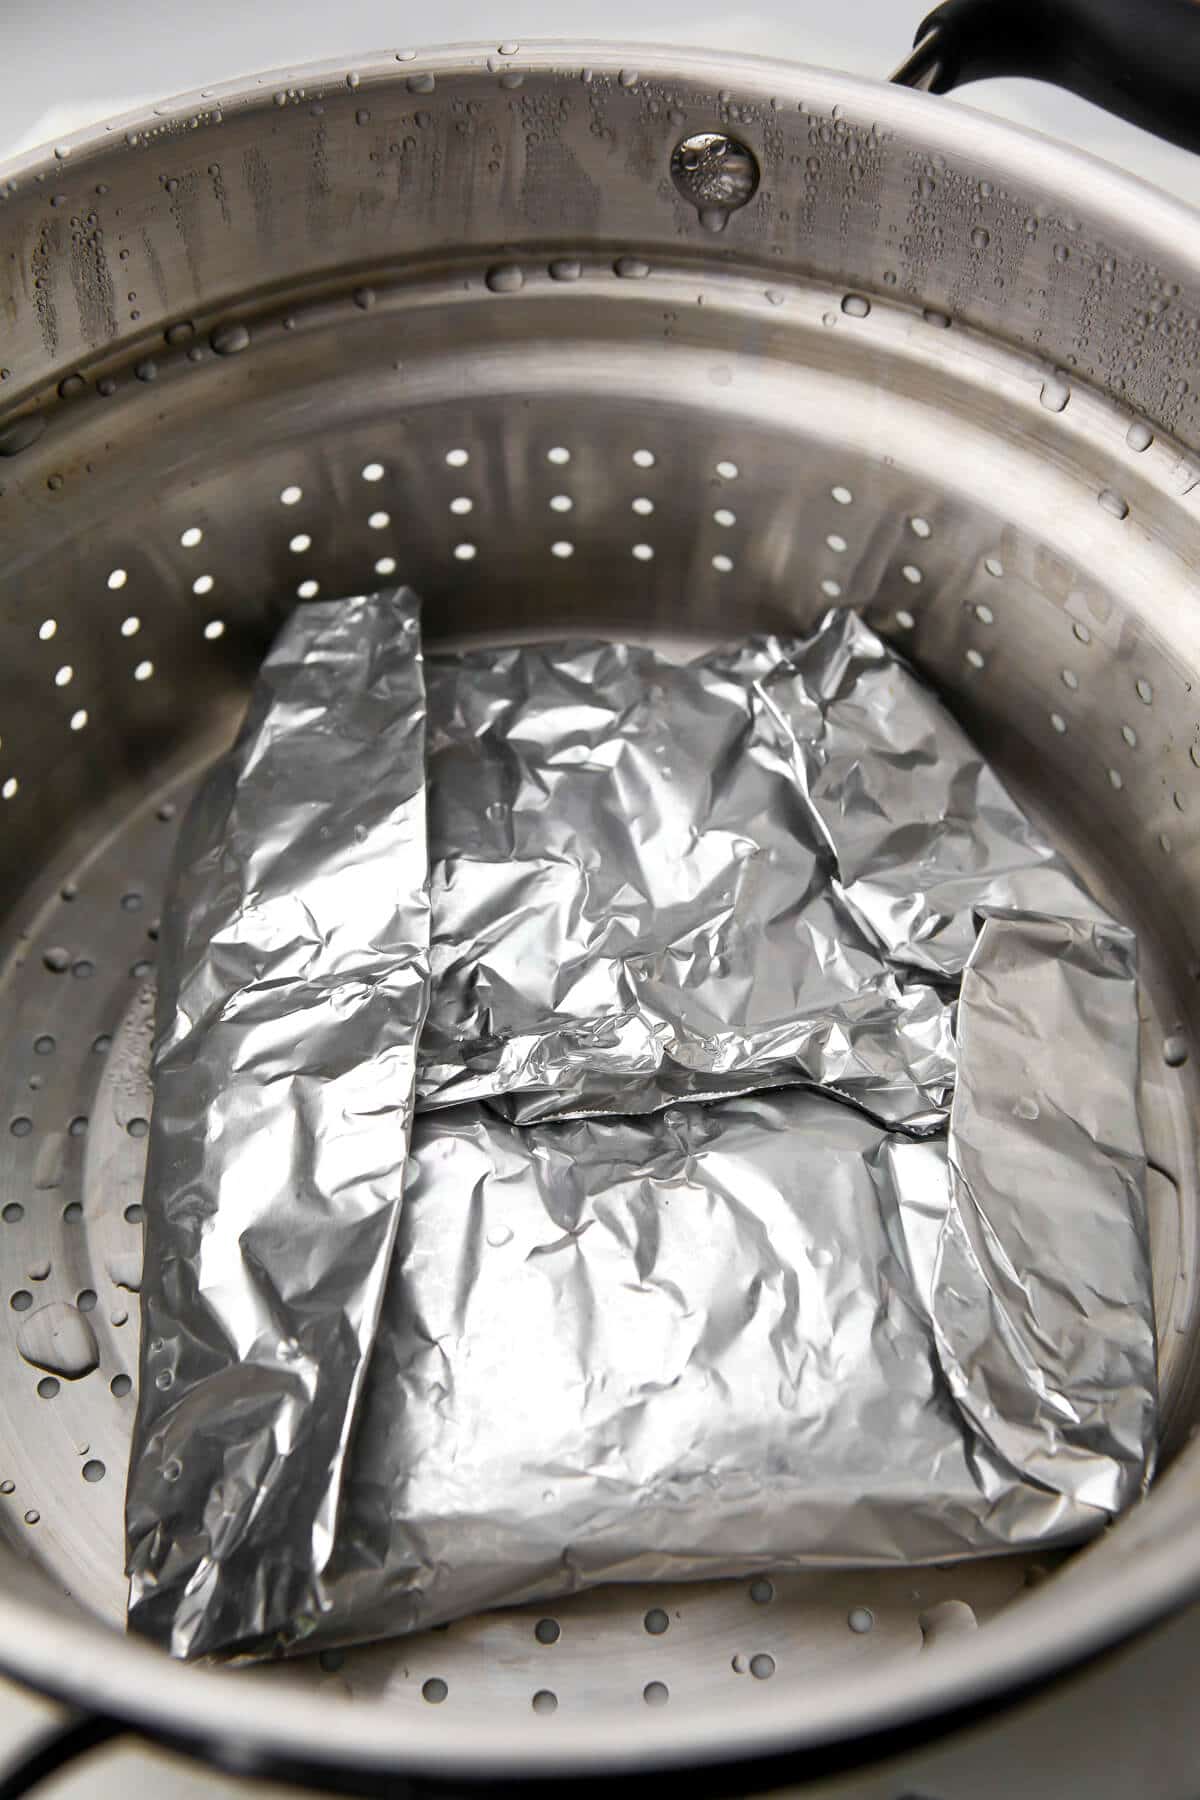 Seitan wrapped in foil in a steamer pot.